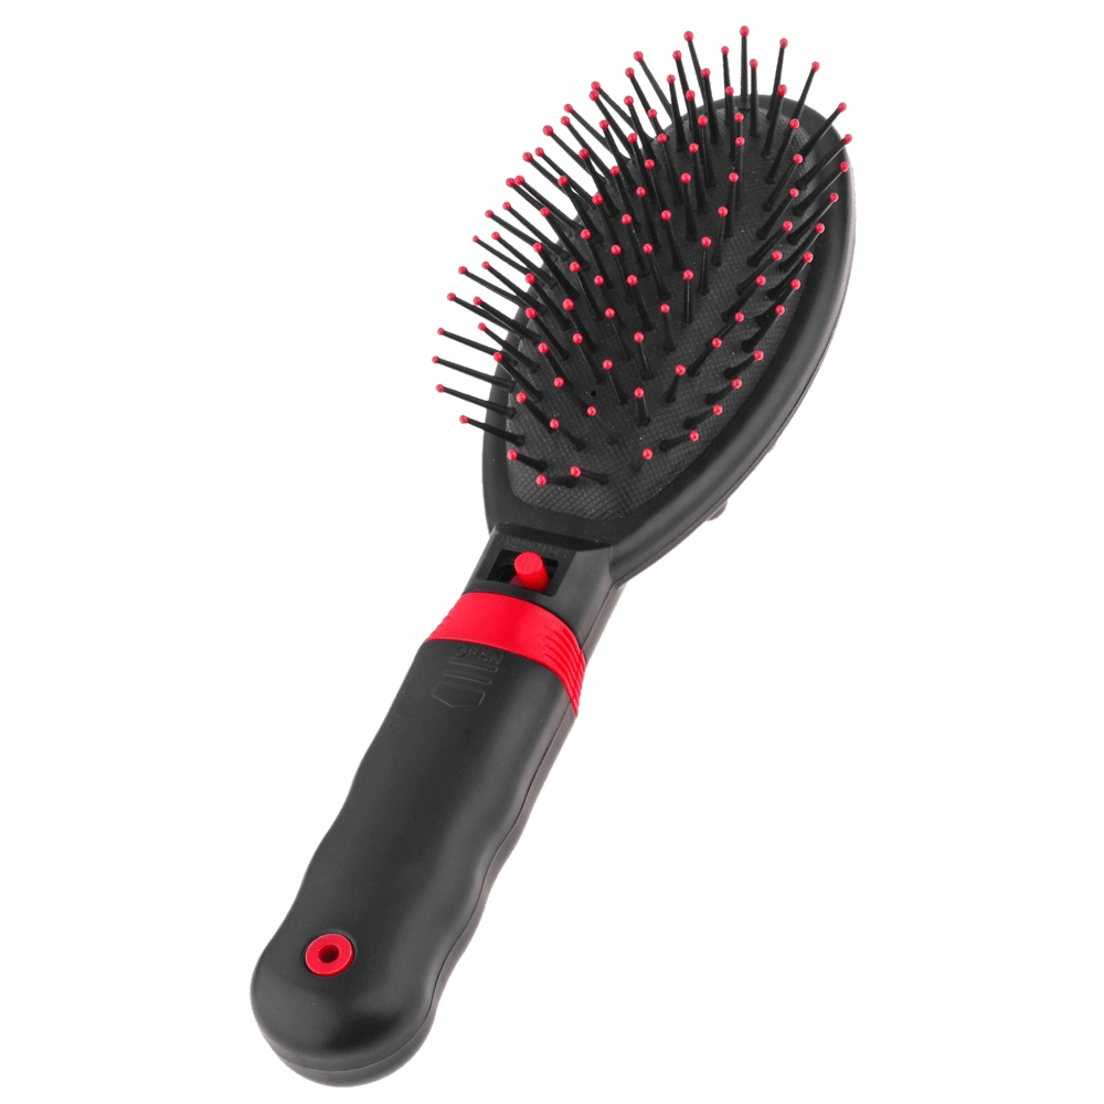 Hairbrush Grooming PNG Photo